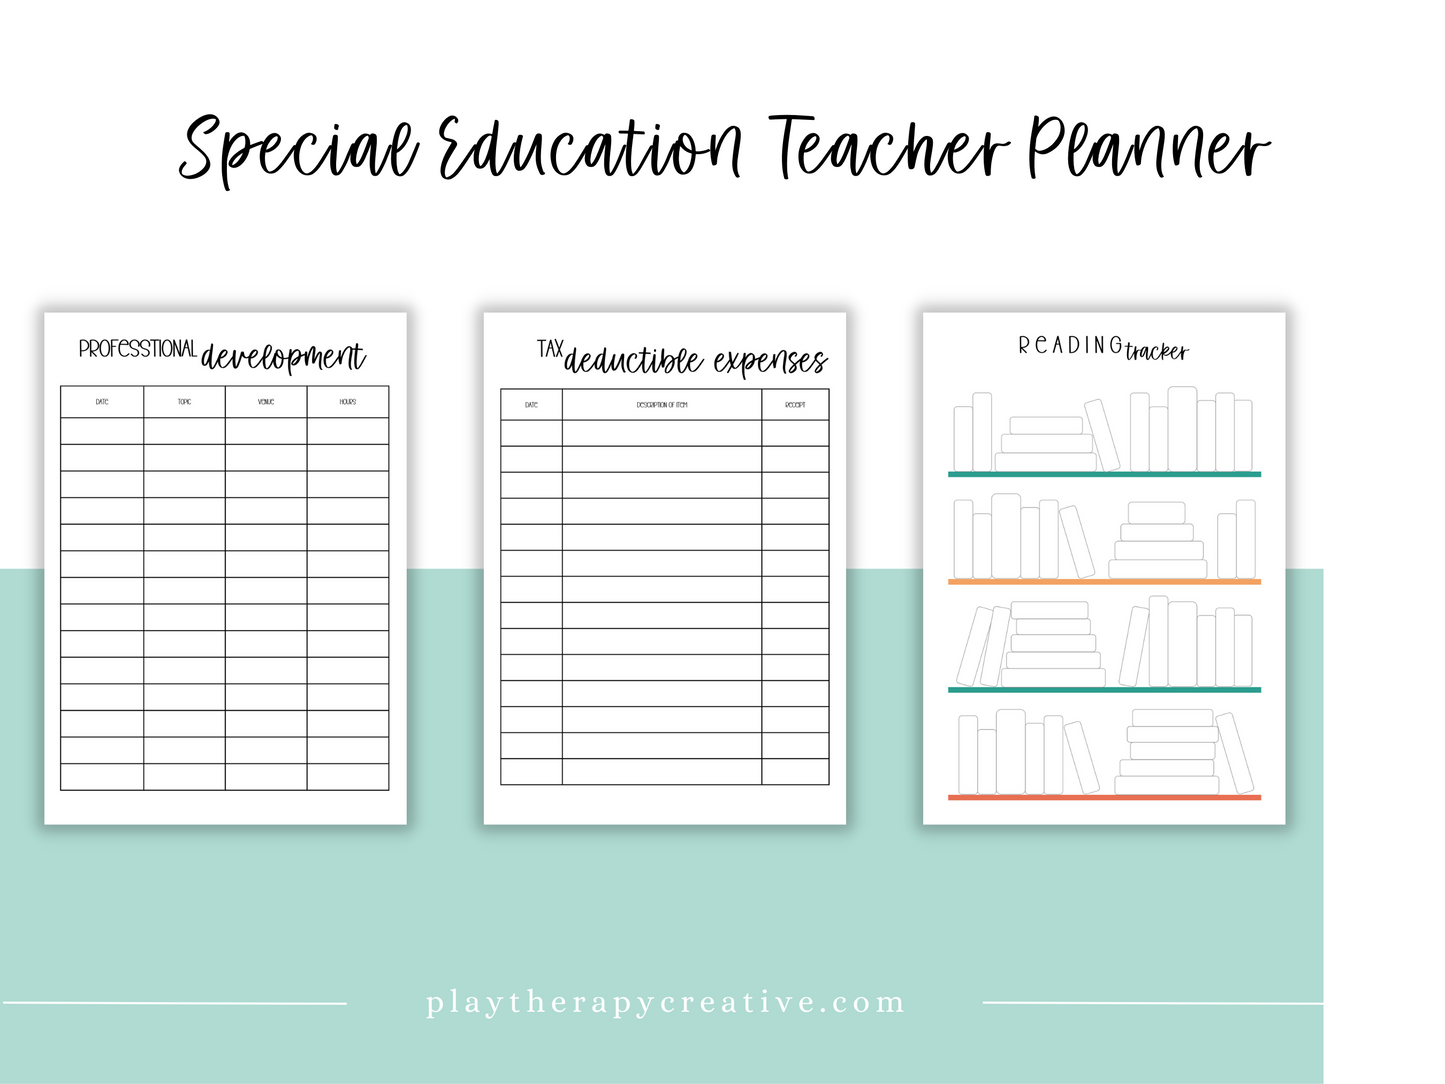 SpEd Teacher Printable Planner - Crayon Theme